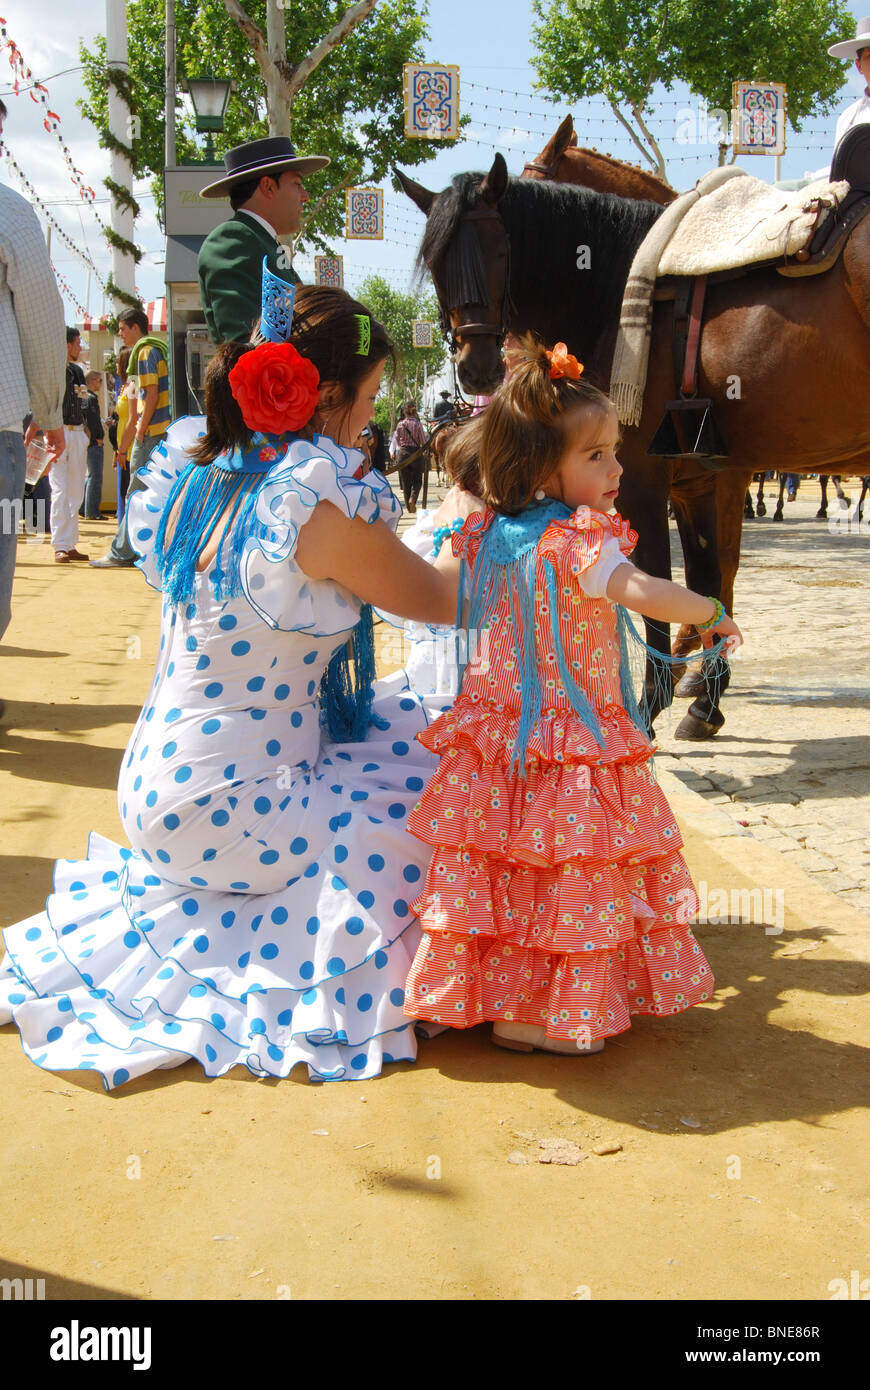 Madre e hija en trajes de flamenca, Feria abril Feria de primavera, Sevilla, provincia de Sevilla, Andalucía, Fotografía de stock - Alamy